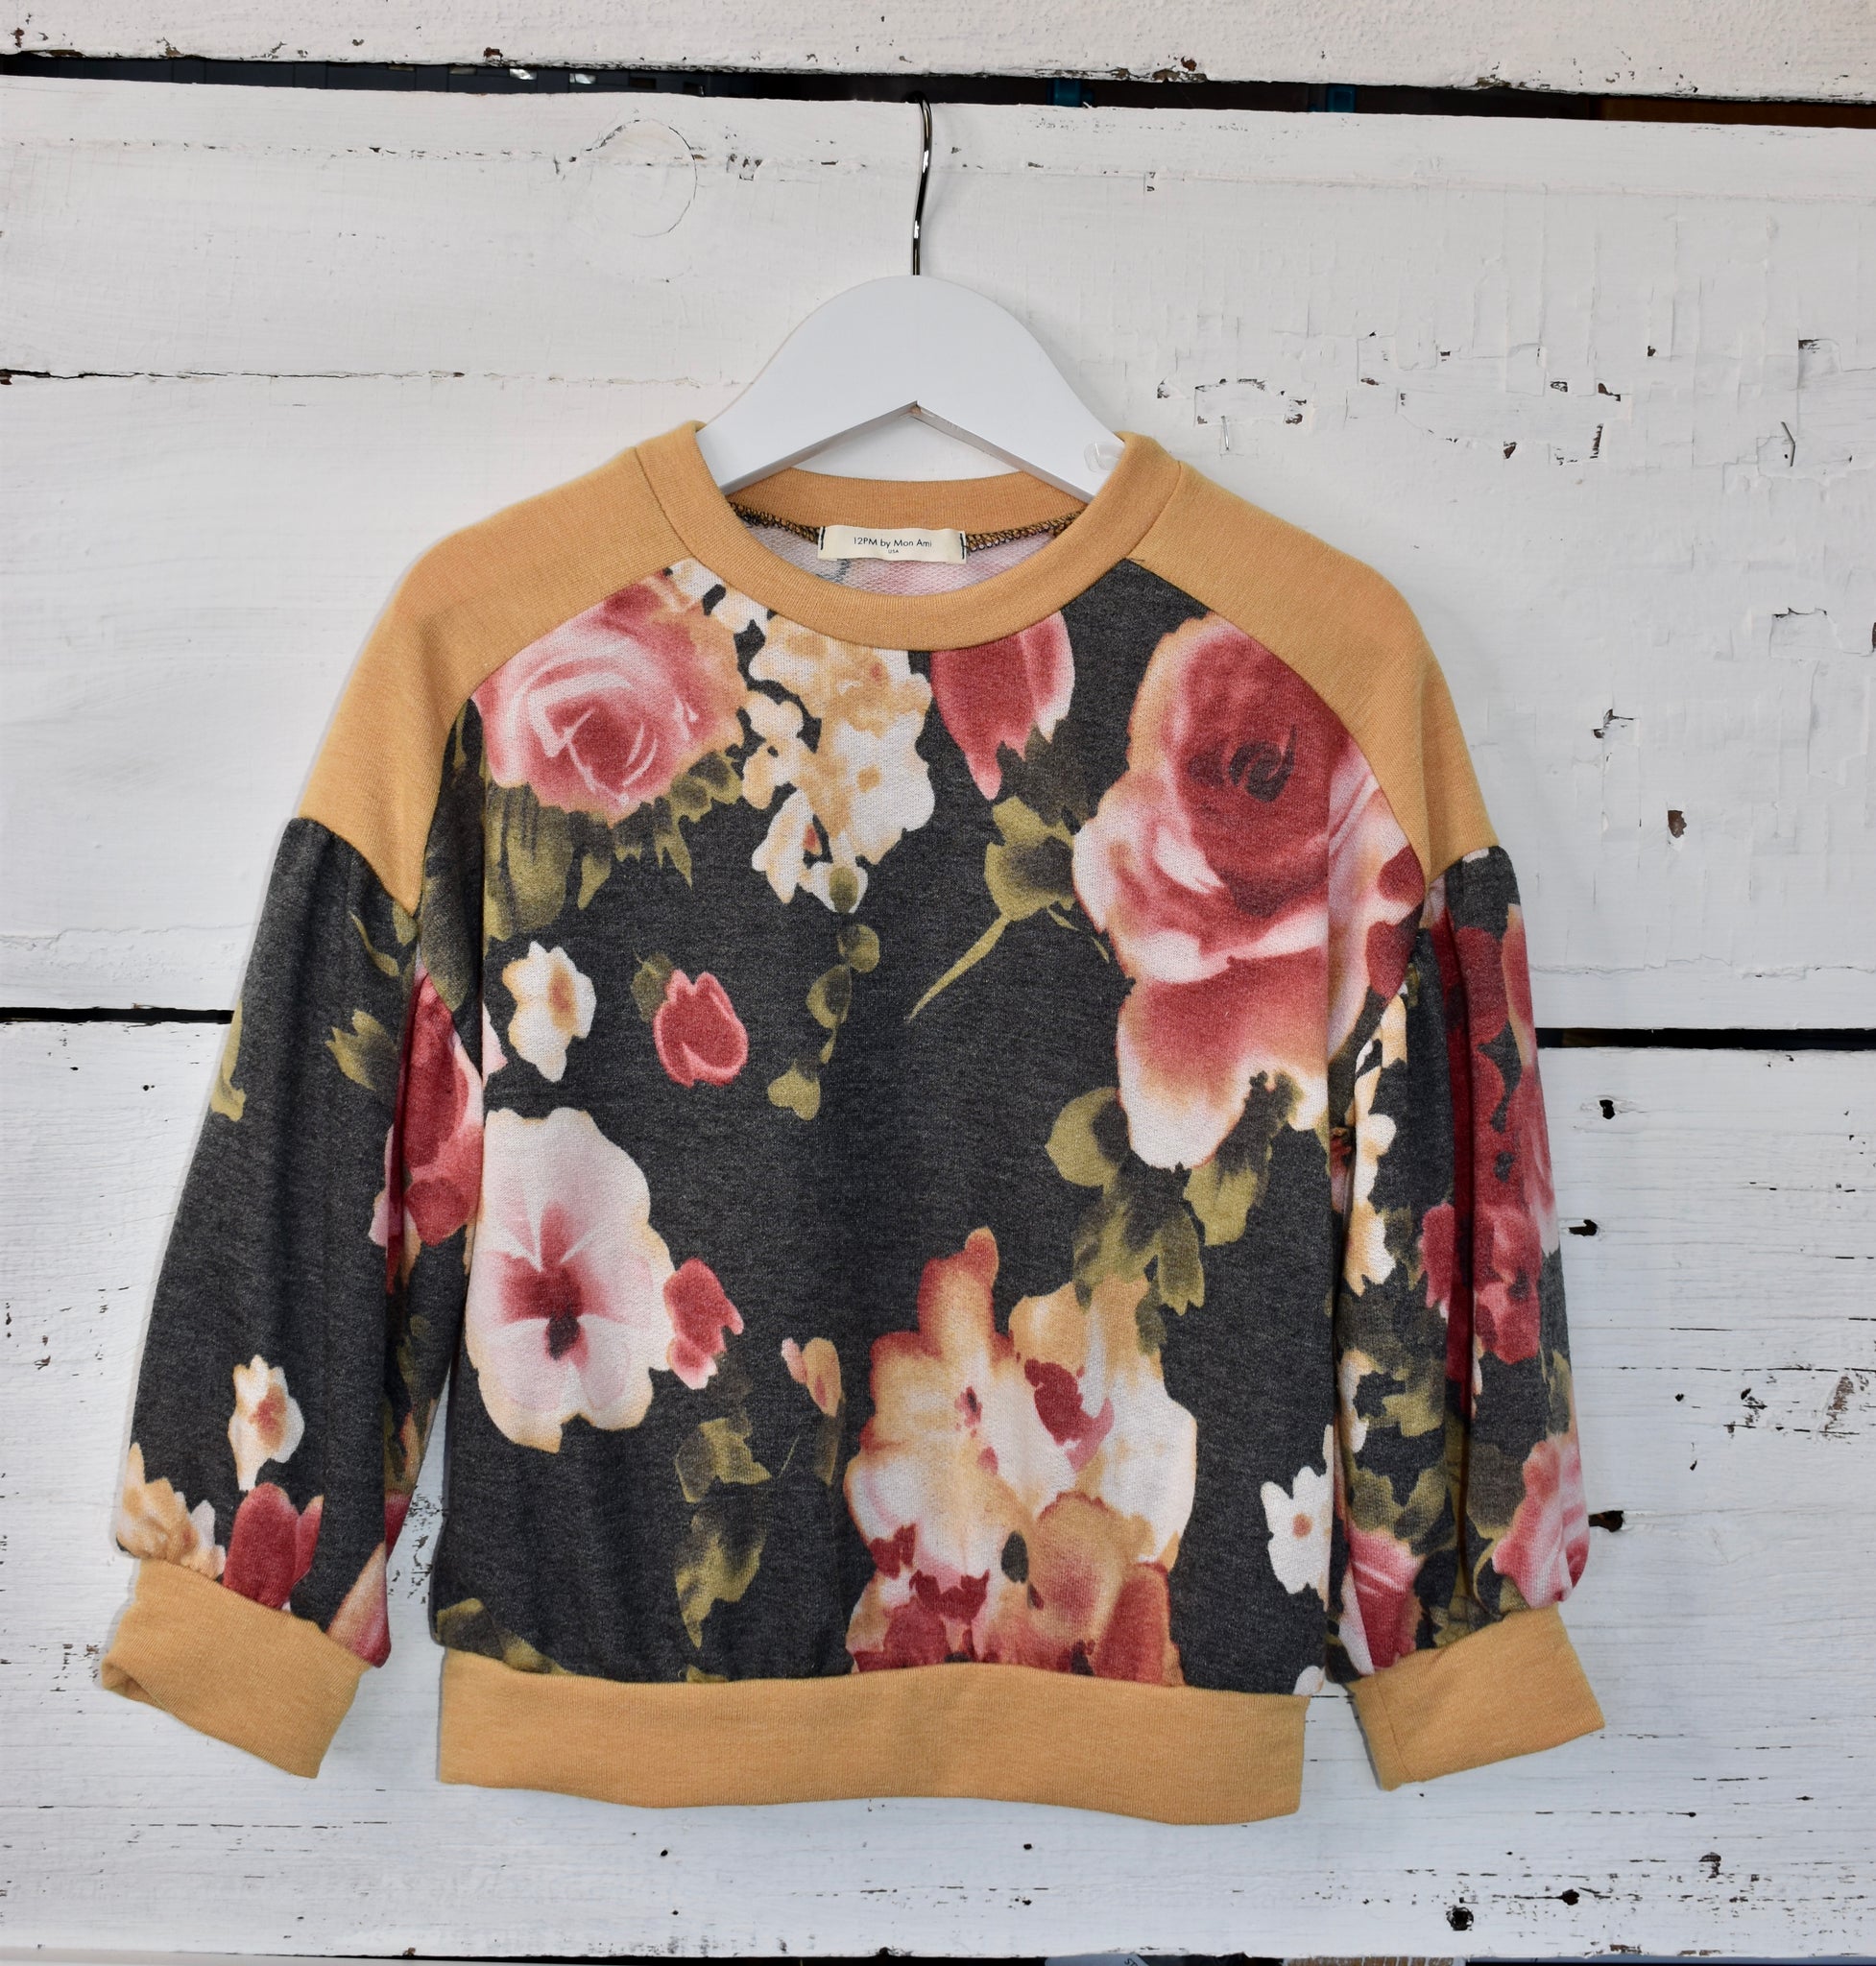 Flower print sweater top